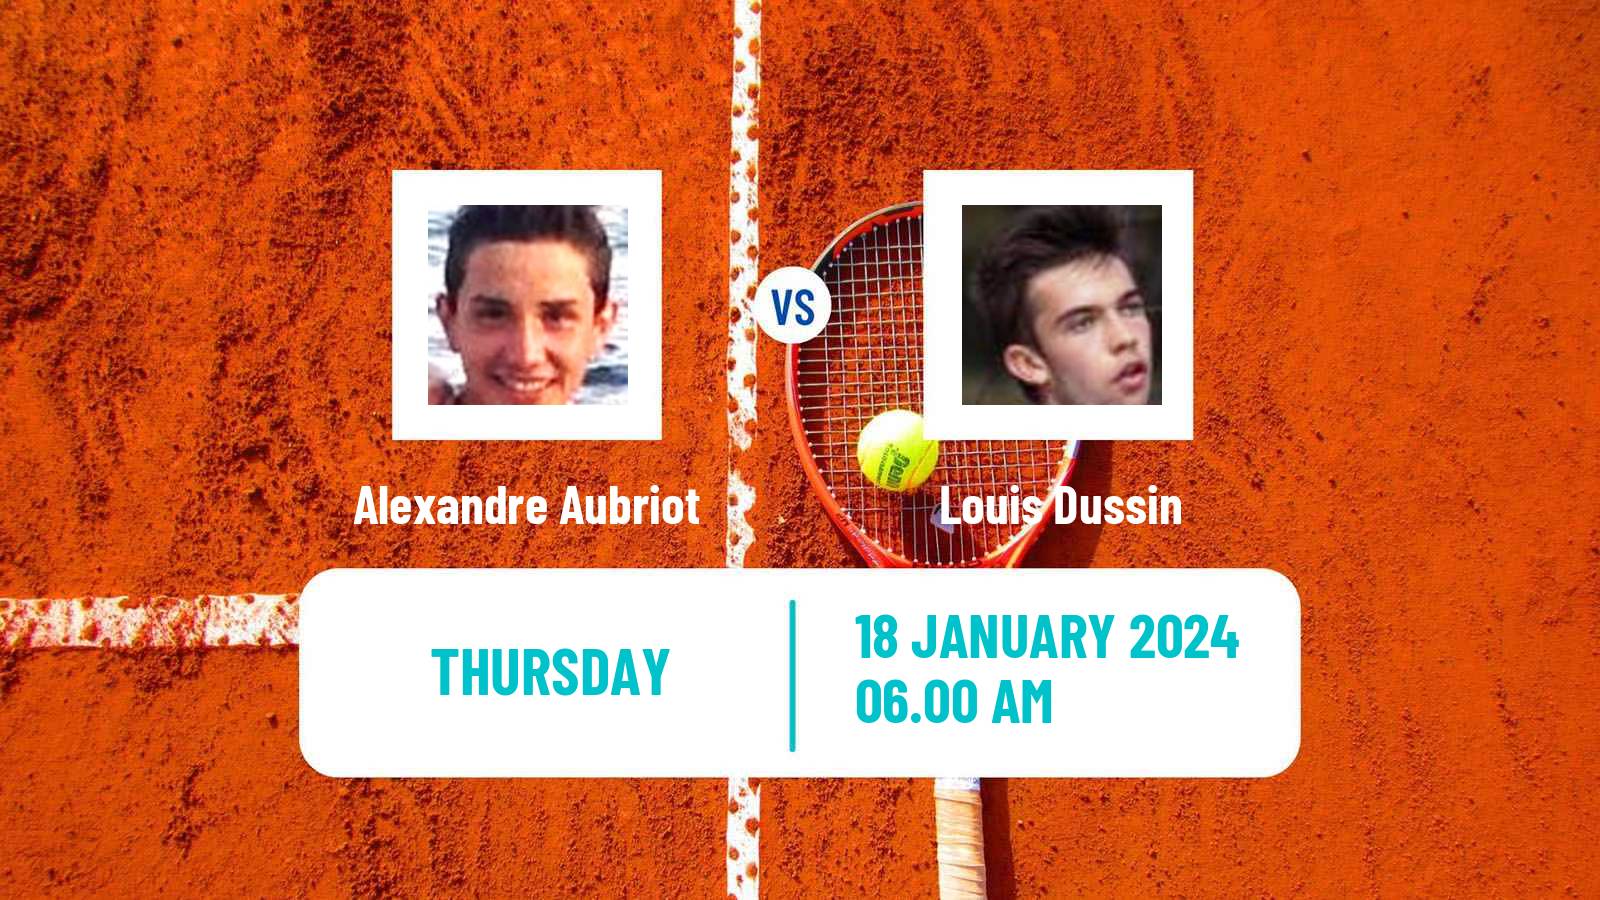 Tennis ITF M15 Bressuire Men Alexandre Aubriot - Louis Dussin